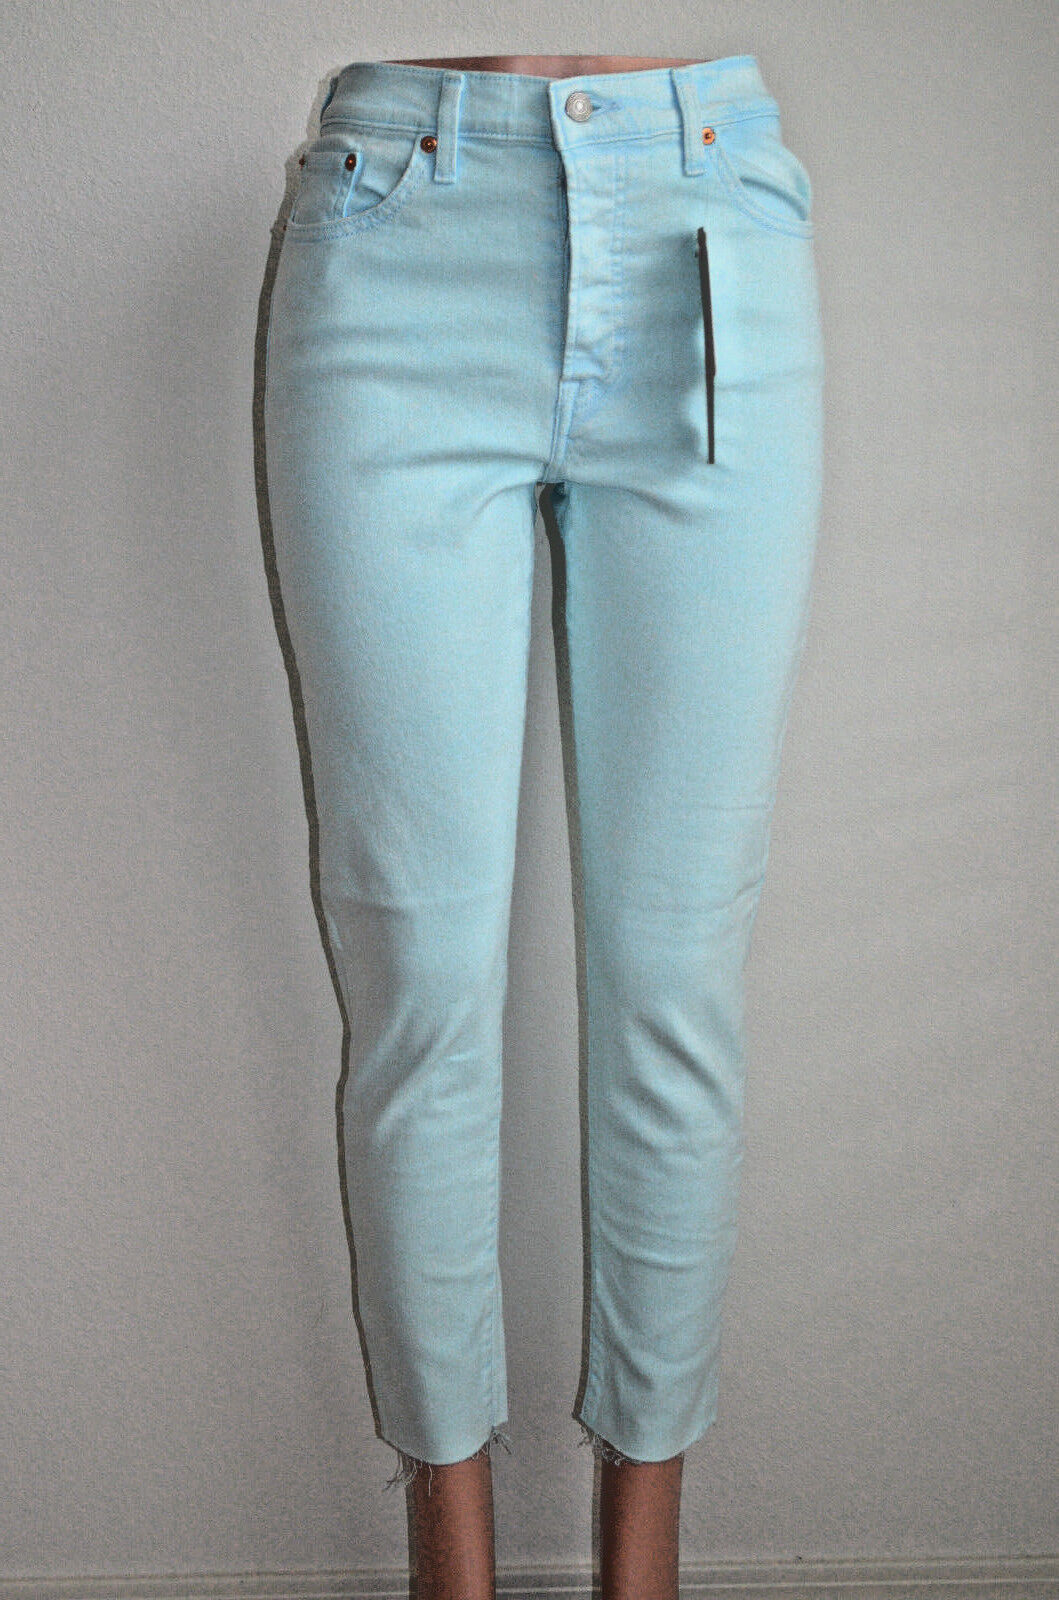 Levi's Wedgie Fit Skinny Jeans Stonewash Iced Aqua NWT Style #523050003